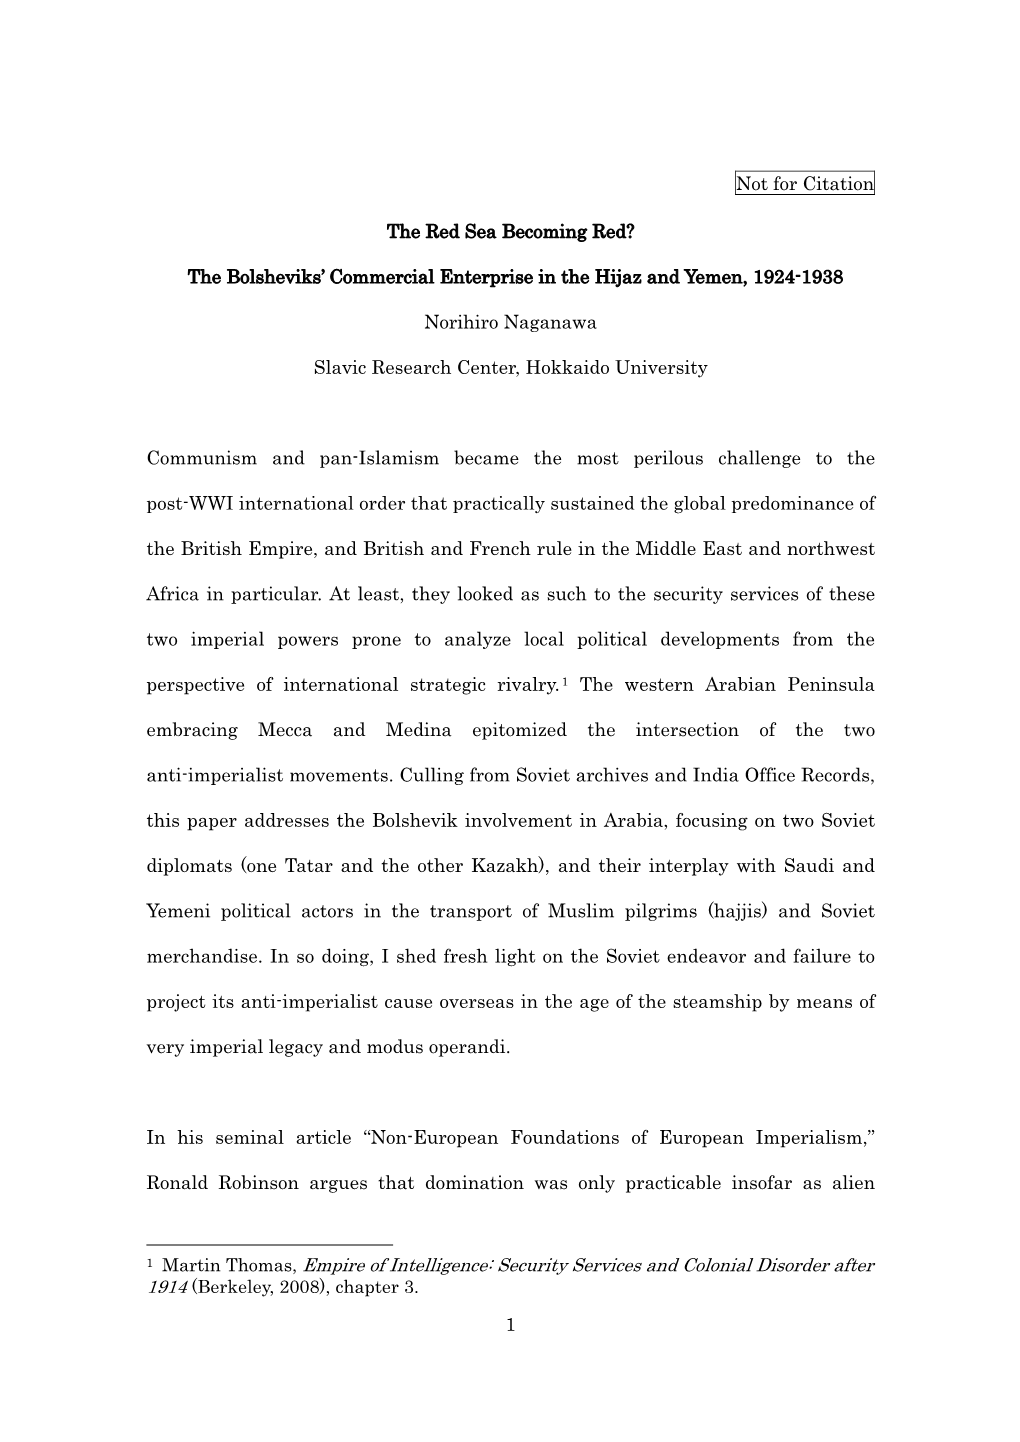 The Bolsheviks' Commercial Enterprise in the Hijaz and Yemen